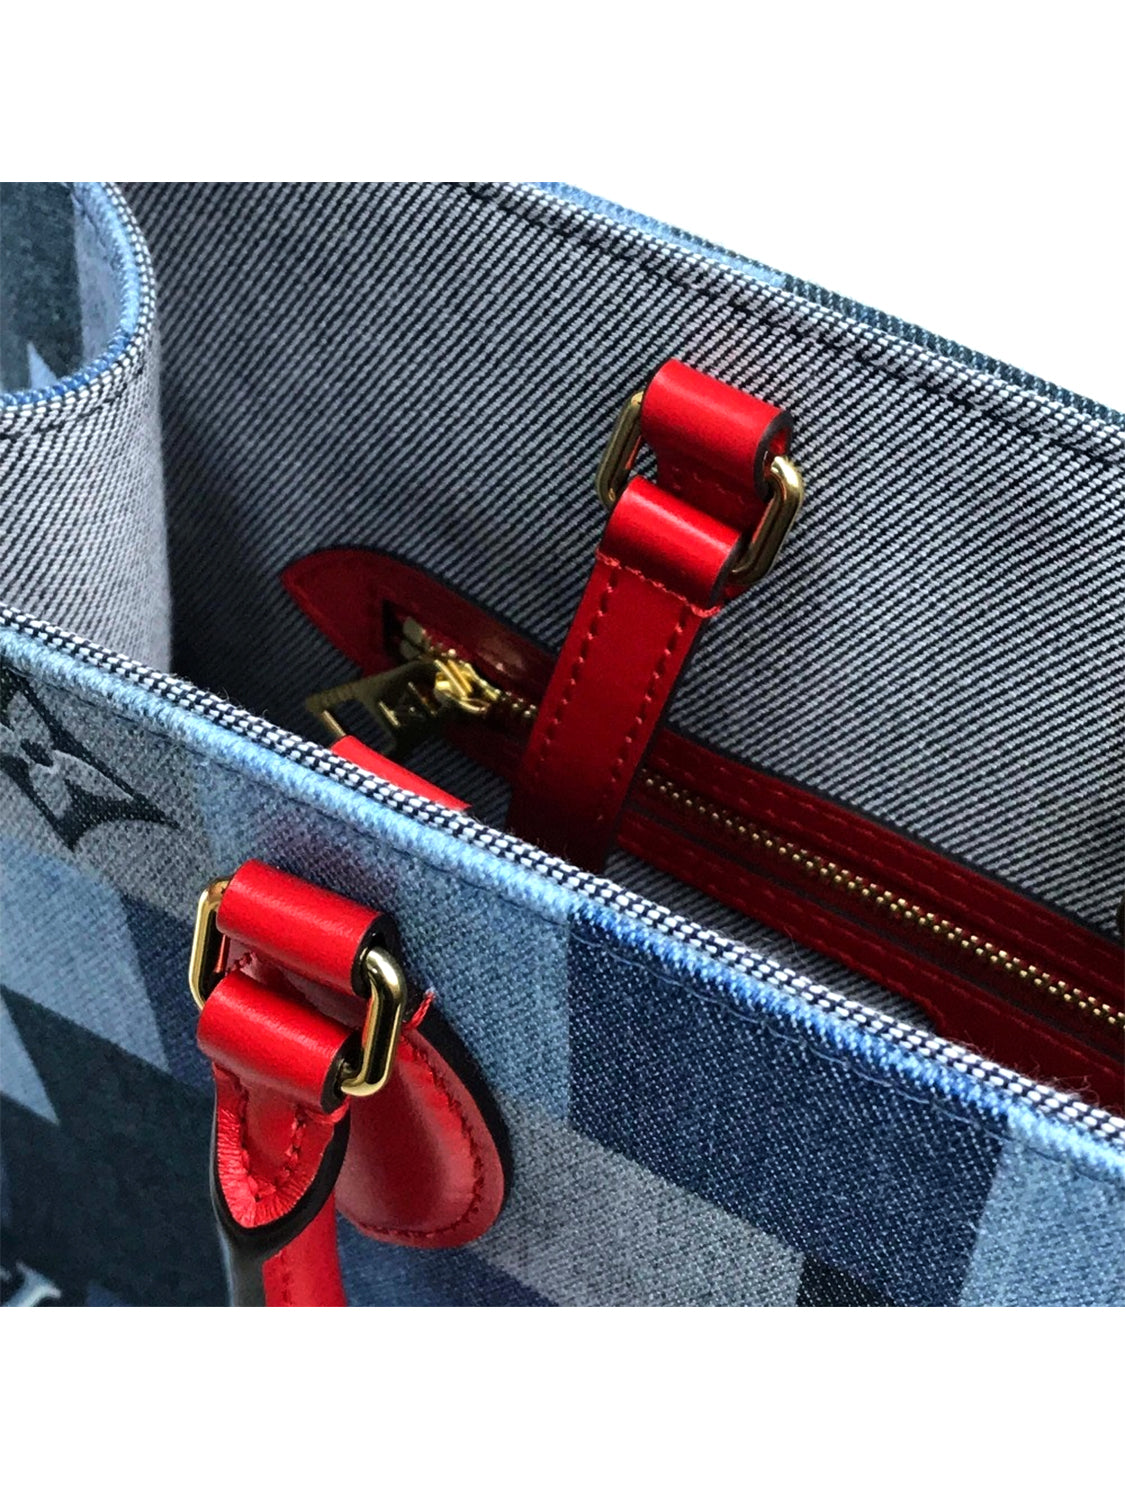 Louis Vuitton Denim Handbag. Red and Blue LV Logo Purse.